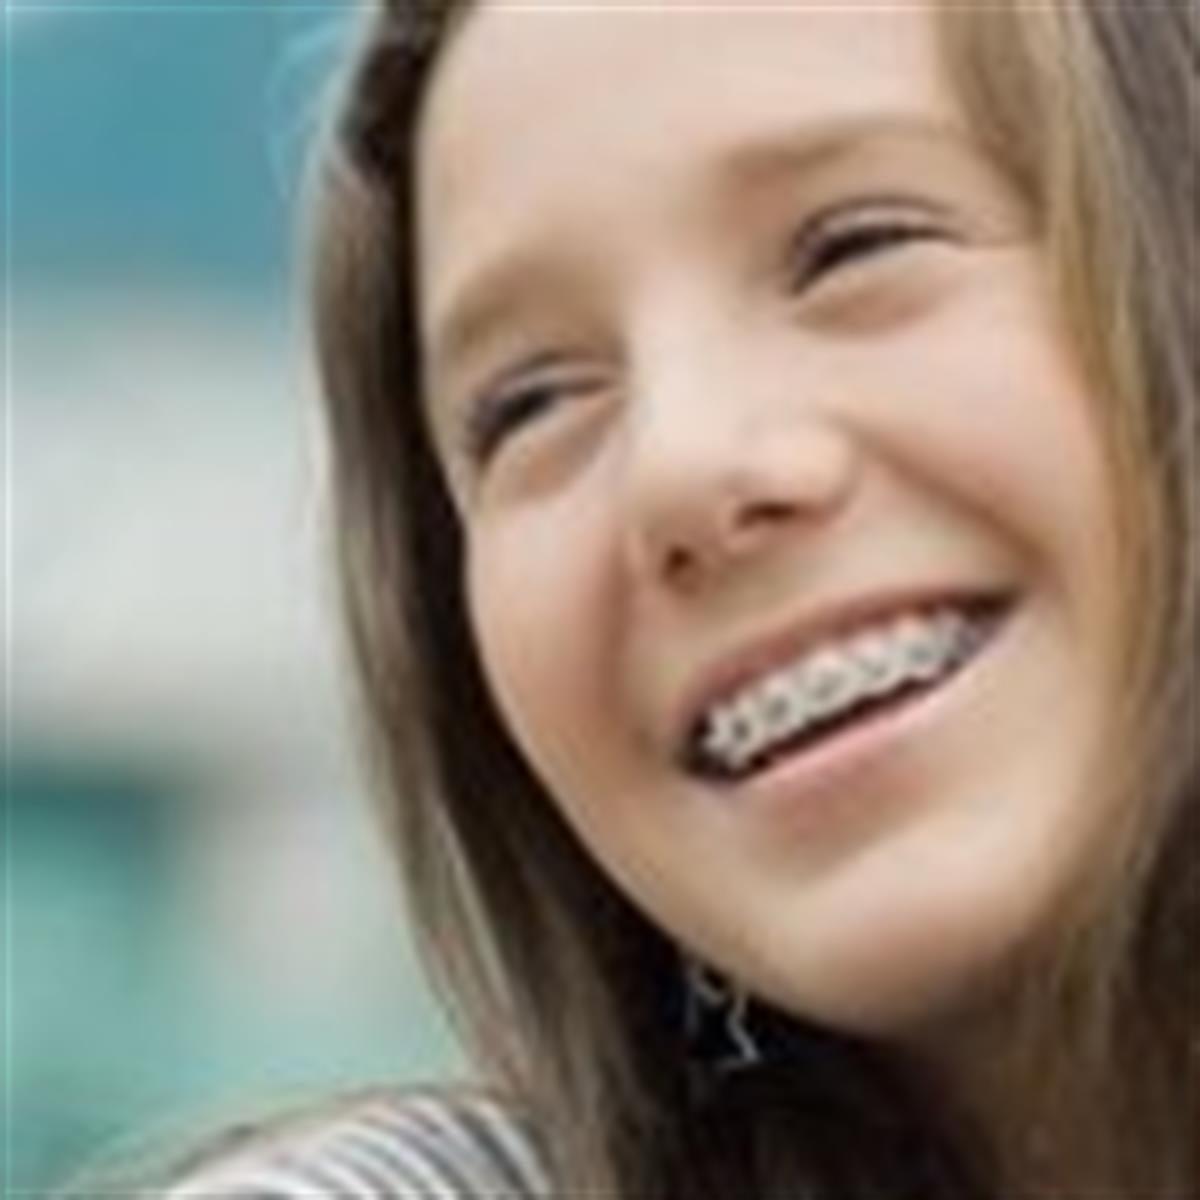 Teen Girls Play Together - Ways To Build Your Teenager's Self-Esteem - HealthyChildren.org